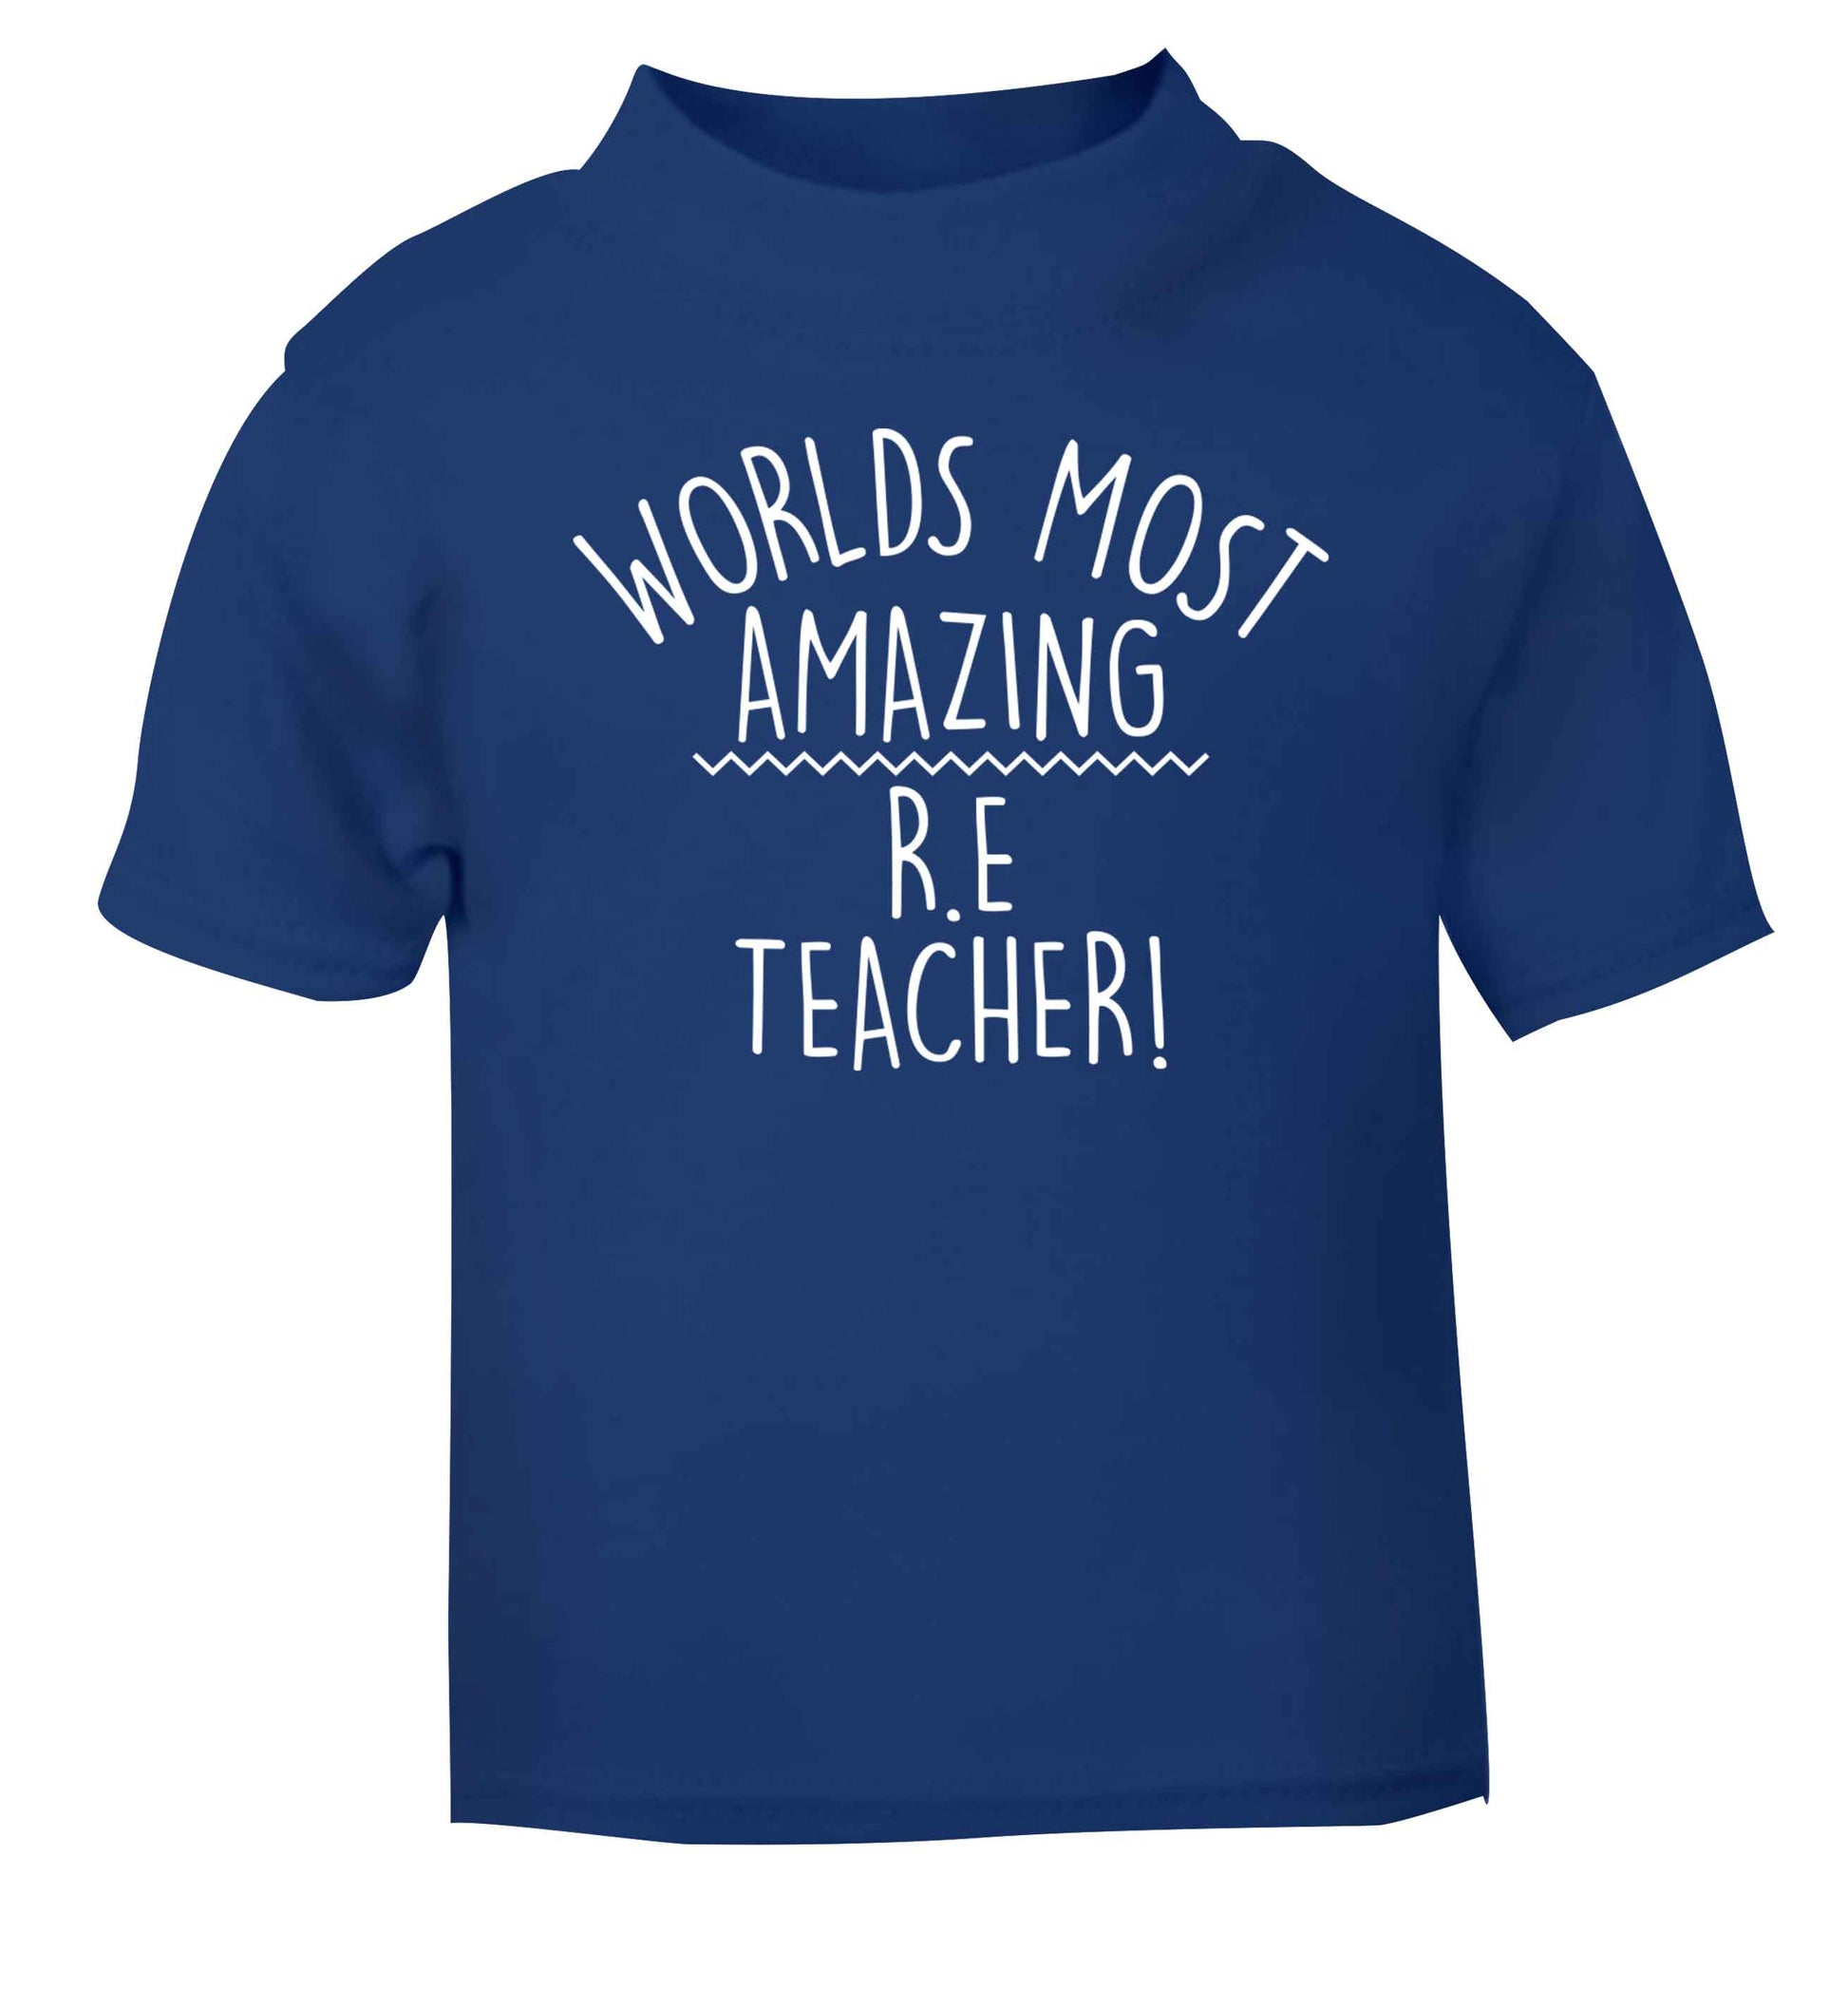 Worlds most amazing R.E teacher blue baby toddler Tshirt 2 Years